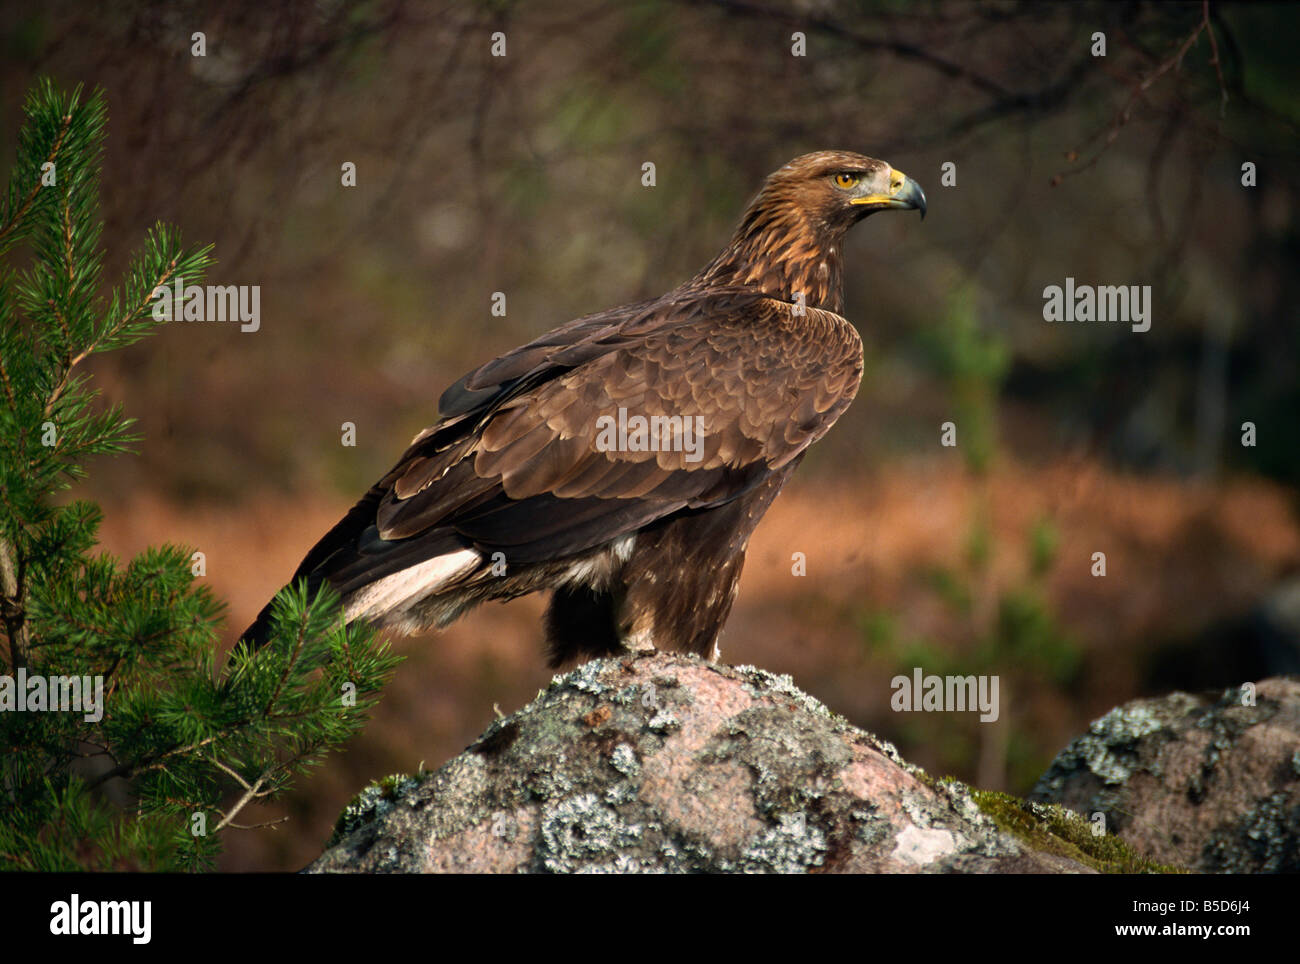 Portrait of a Golden Eagle Highlands Scotland UK R Rainford Stock Photo